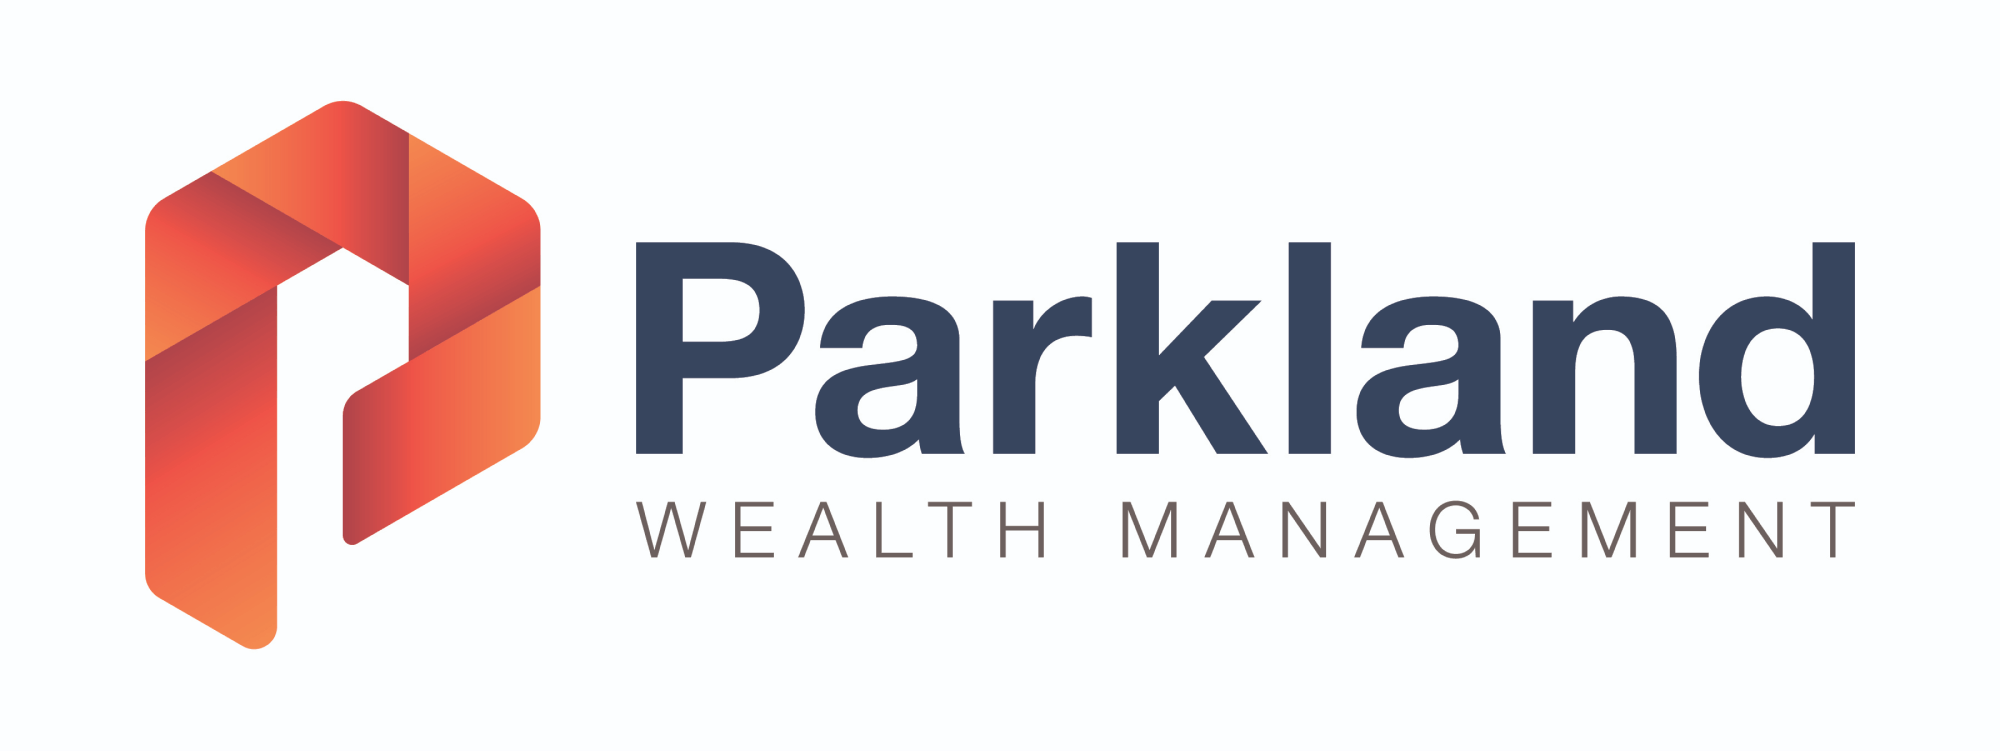 The full logo designed for Parkland Wealth Management web use